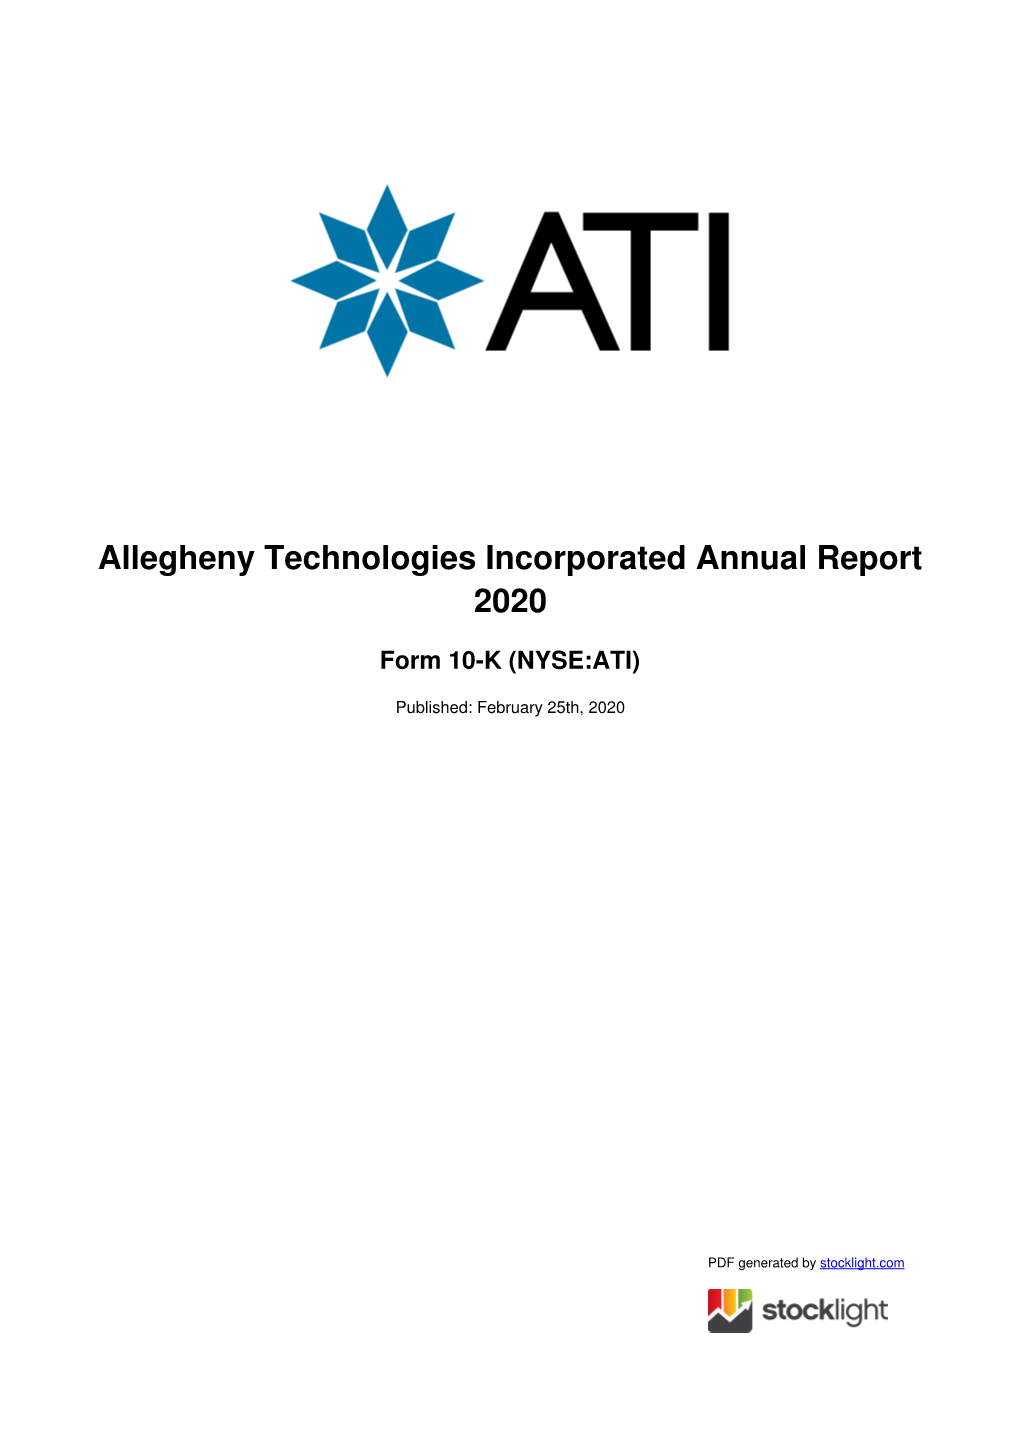 Allegheny Technologies (ATI)